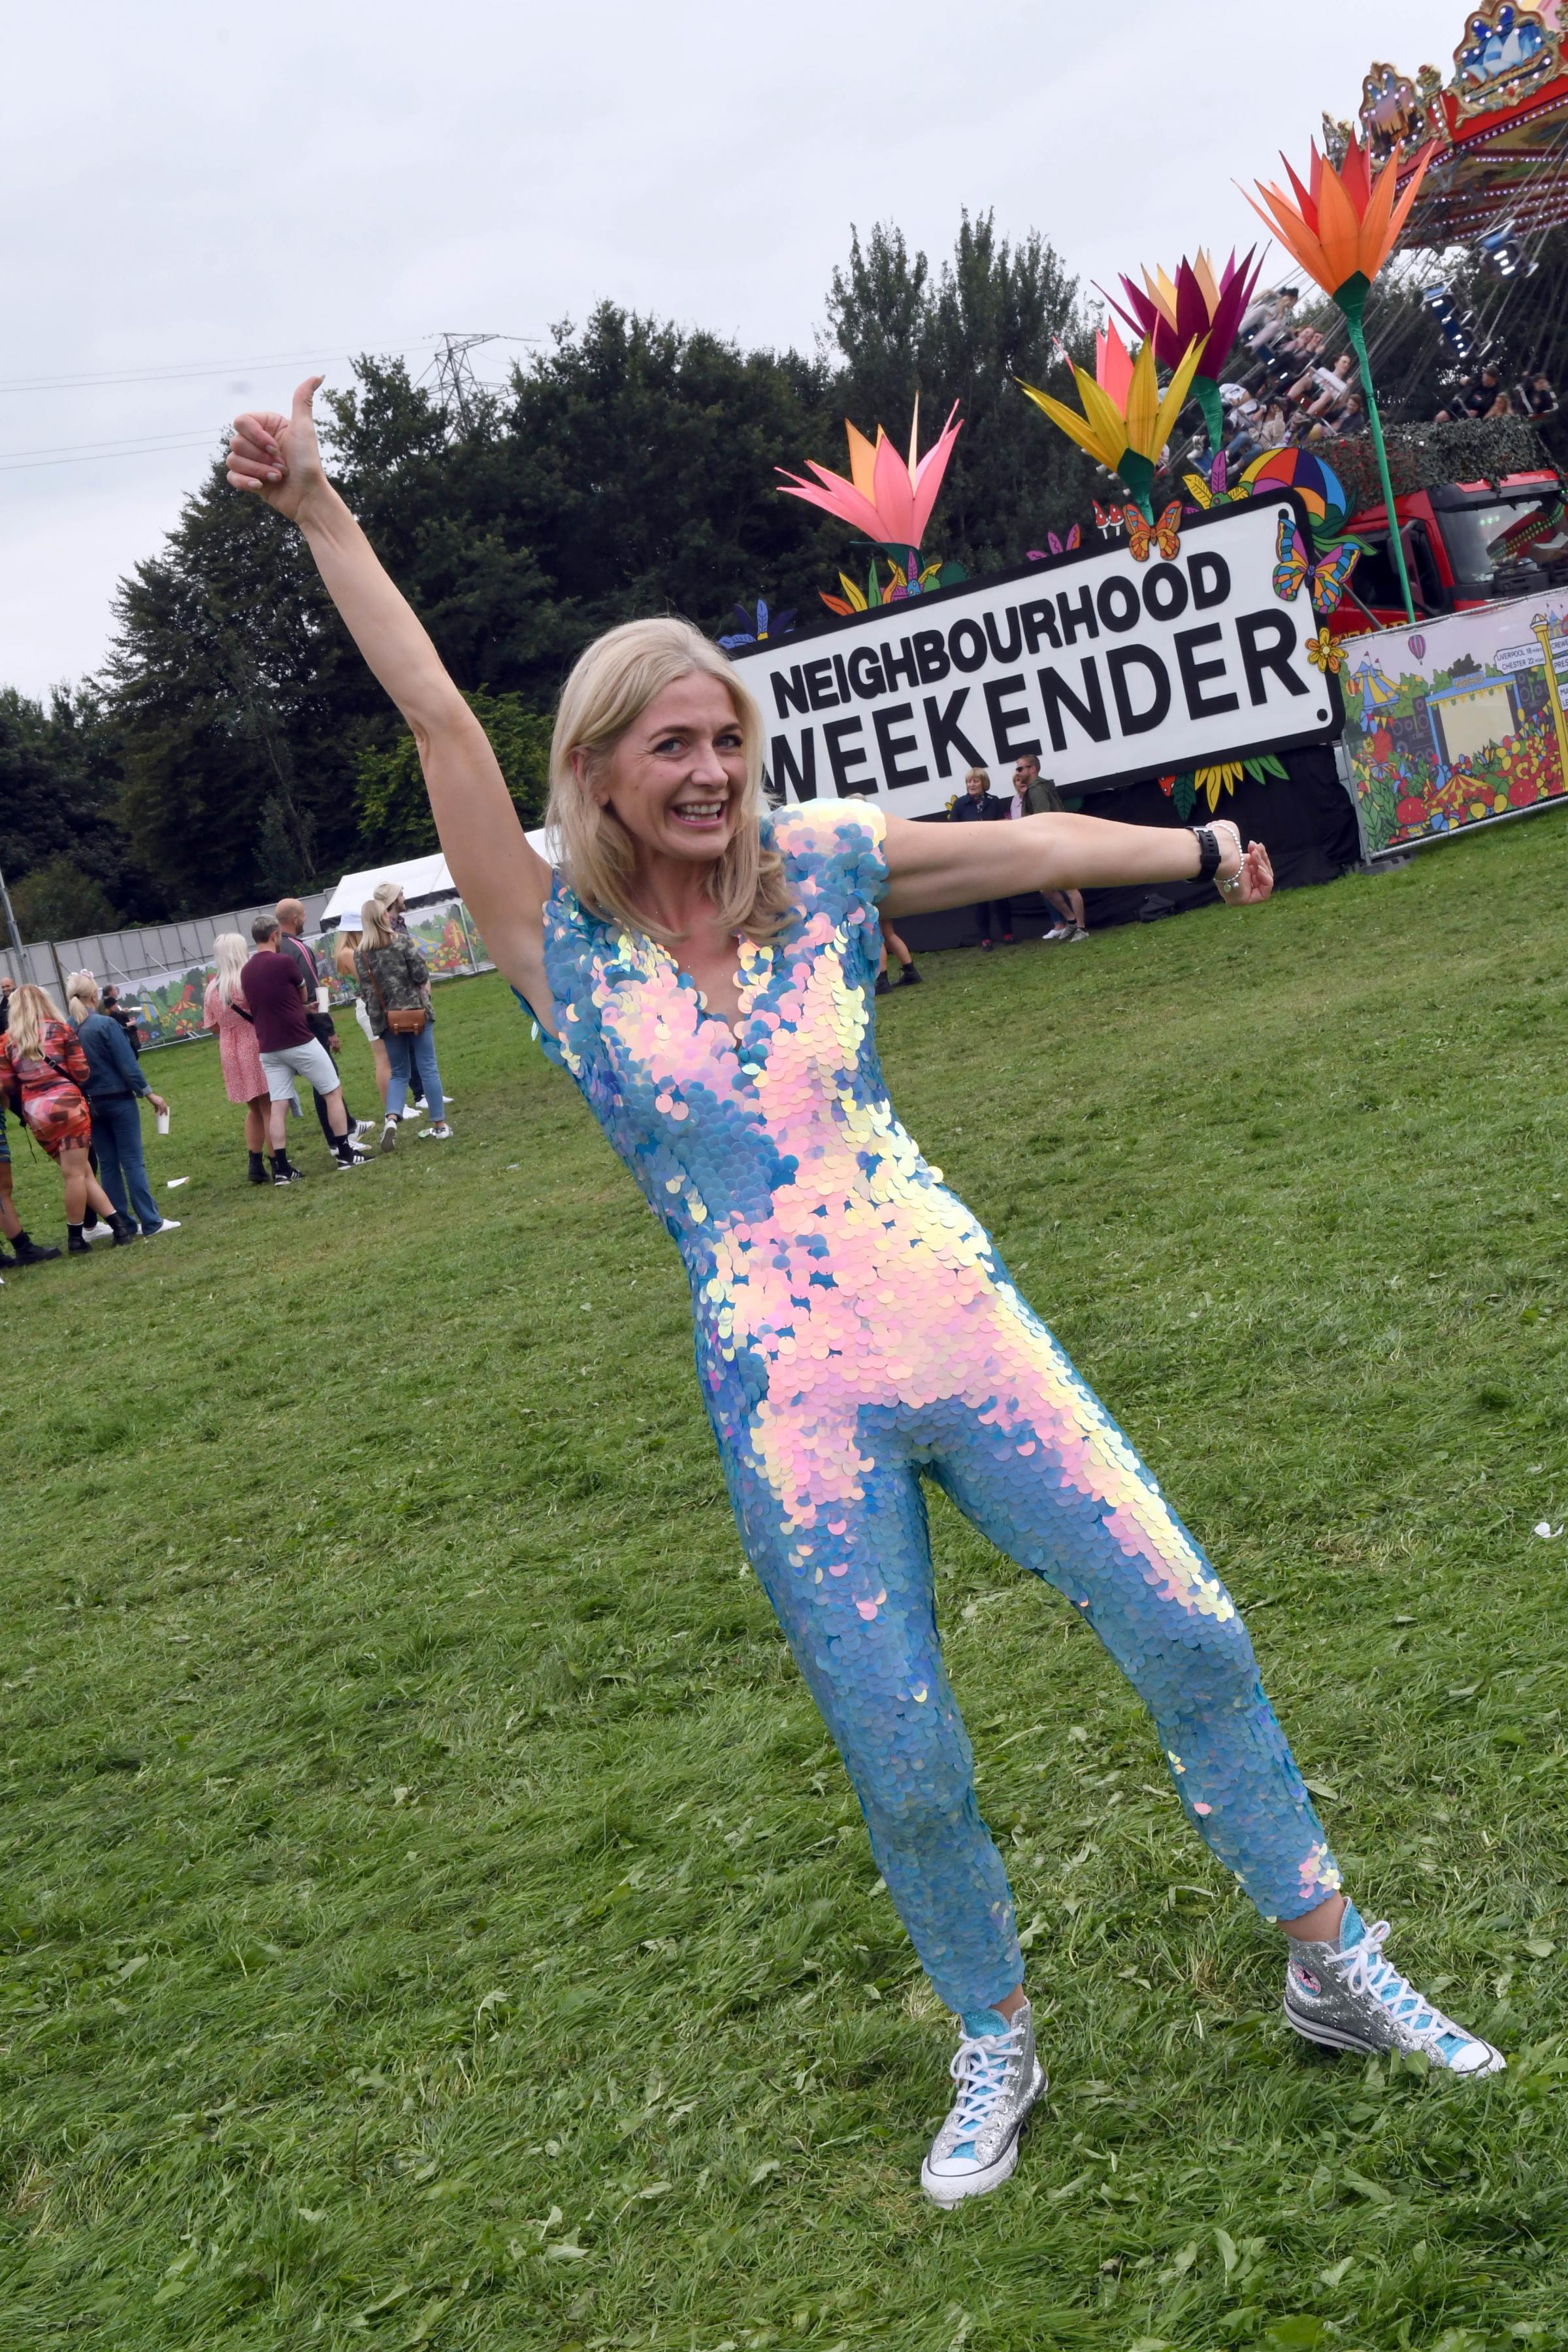 Gallery: Festival fashion at Neighbourhood Weekender in Warrington